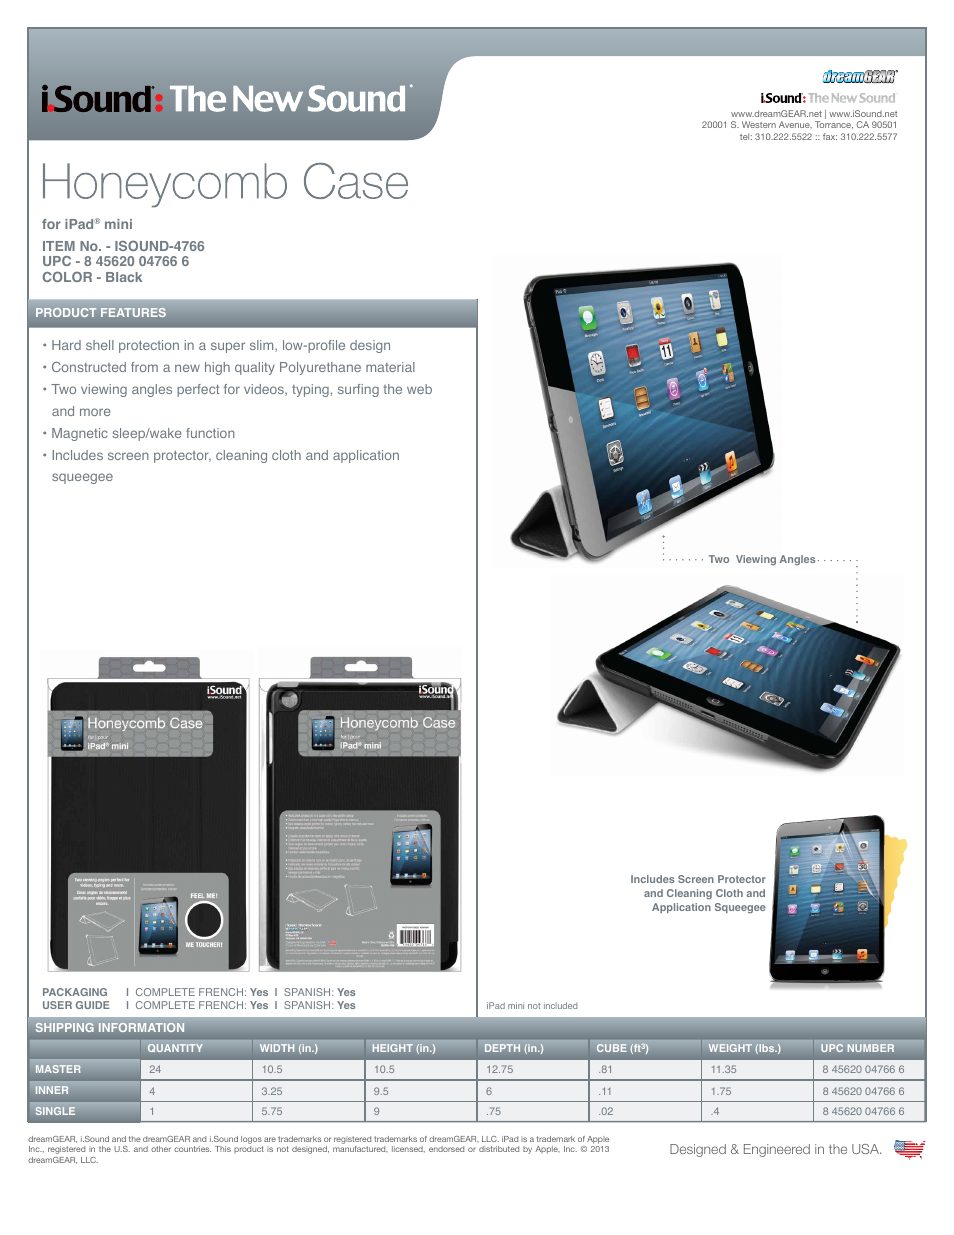 Honeycomb Case for iPadmini - Sell Sheet